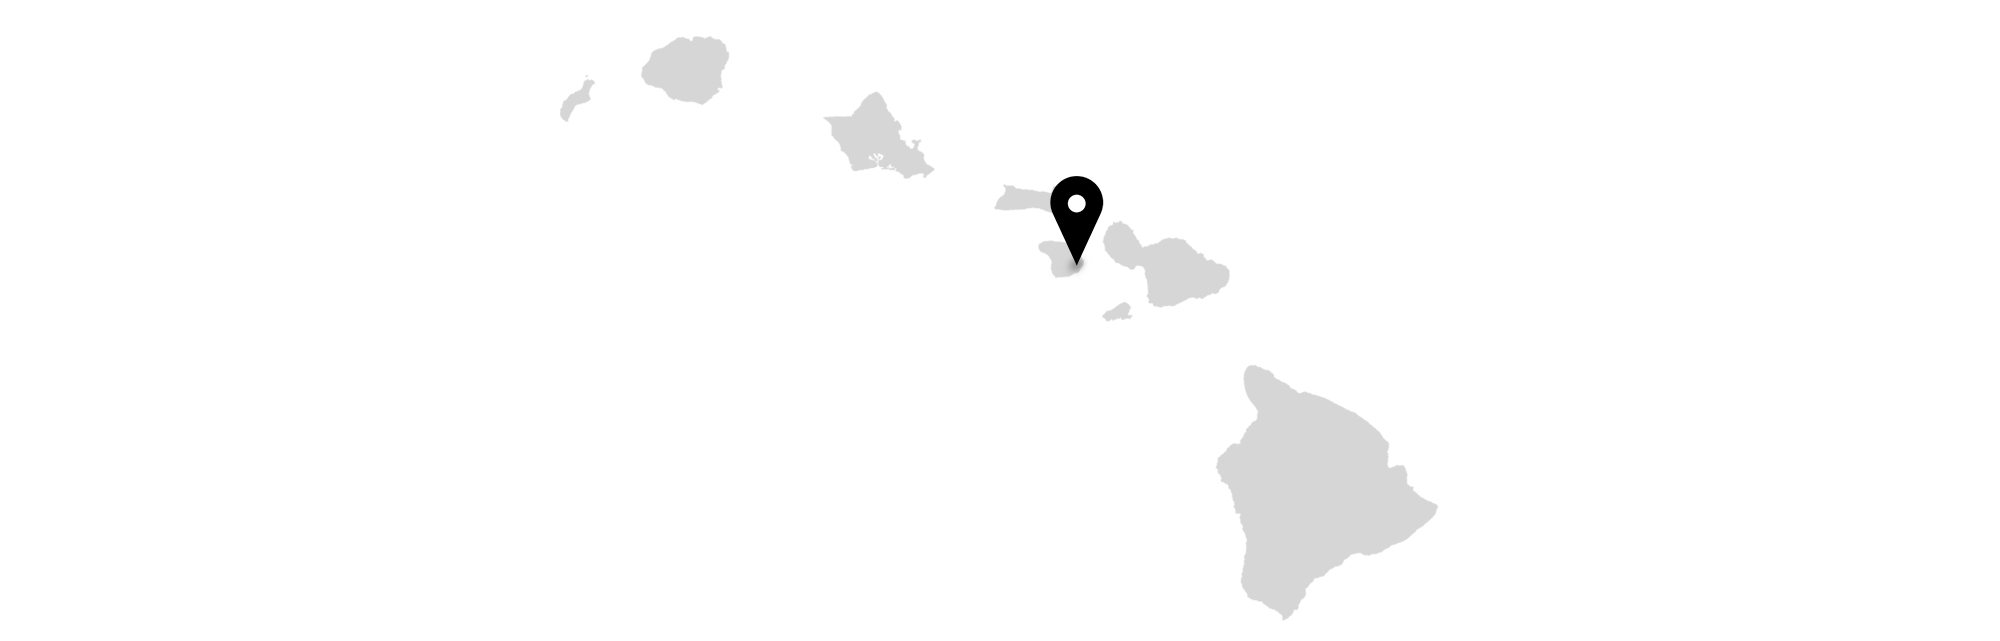 Lanai on Hawaii map